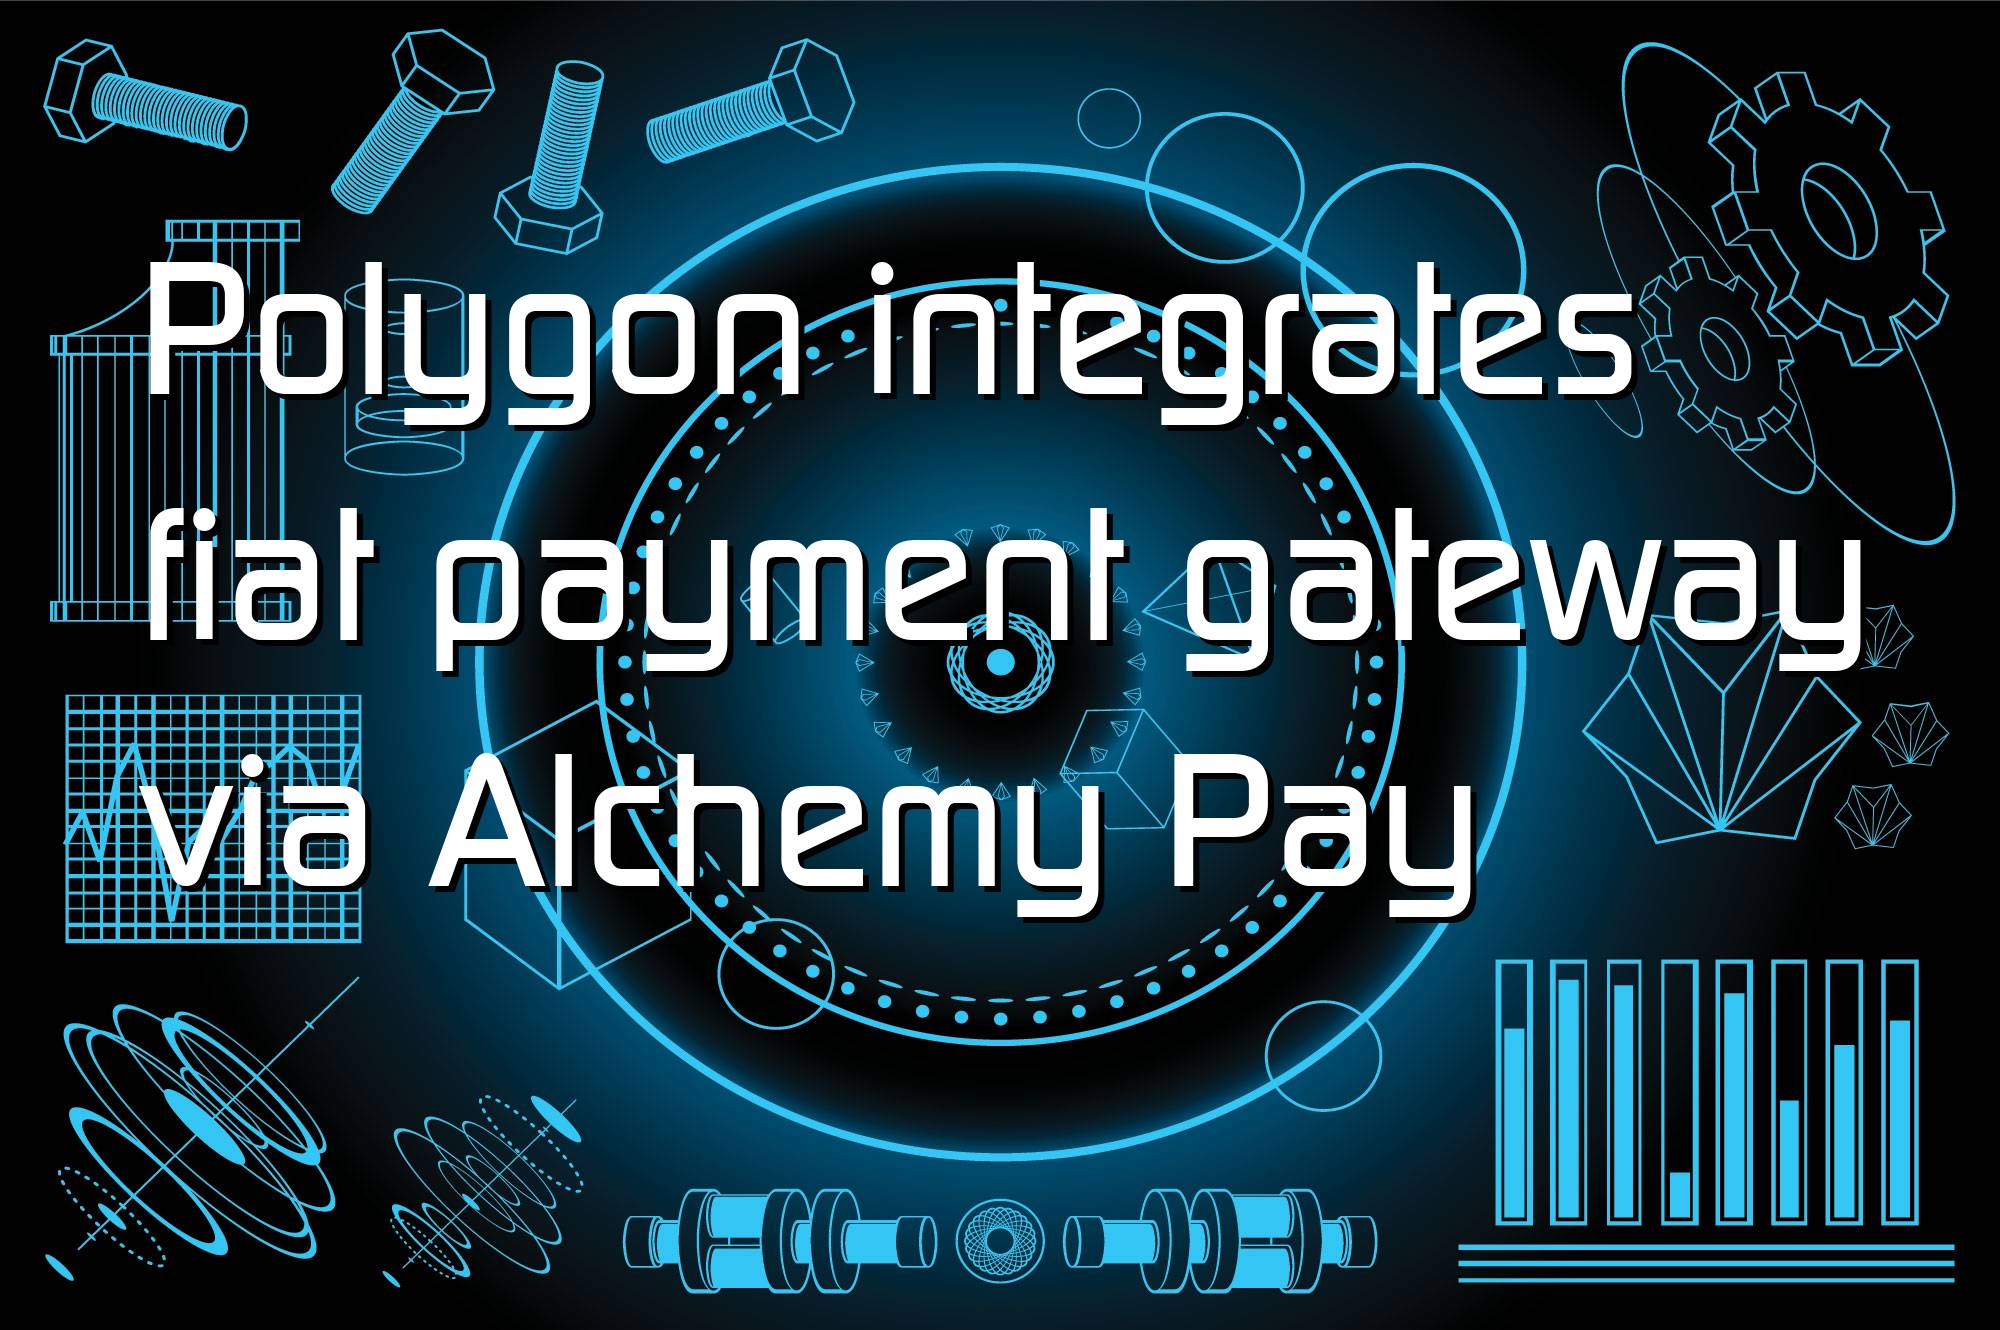 @$67641: Polygon integrates fiat payment gateway via Alchemy Pay